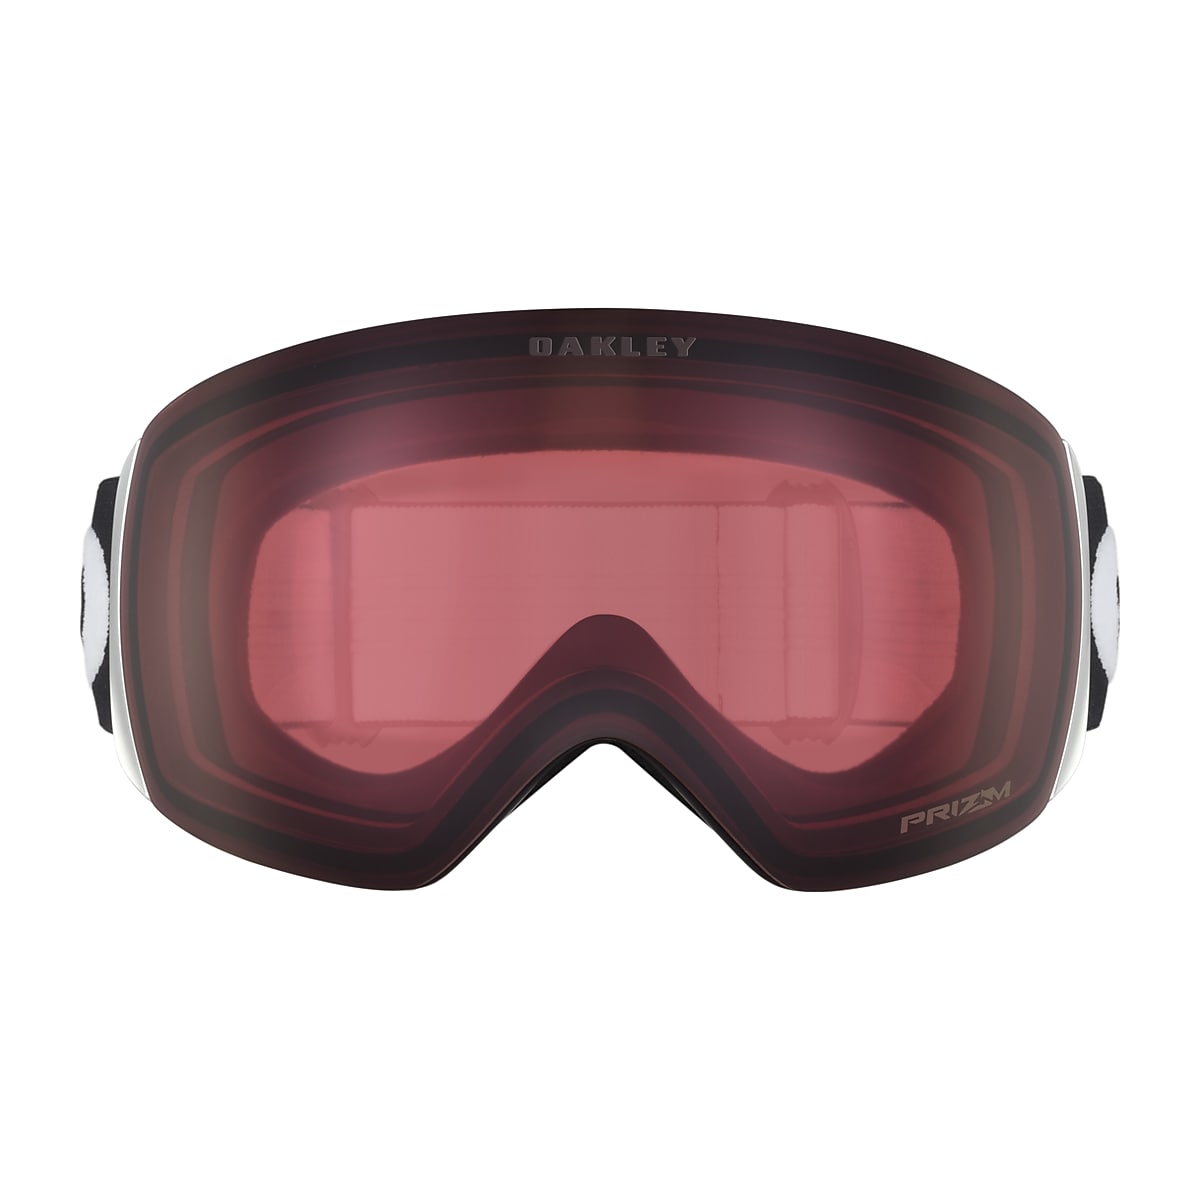 Oakley Flight Deck™ L Snow Goggles - Matte Black - Prizm Snow Rose - OO7050-03  | Oakley JP Store